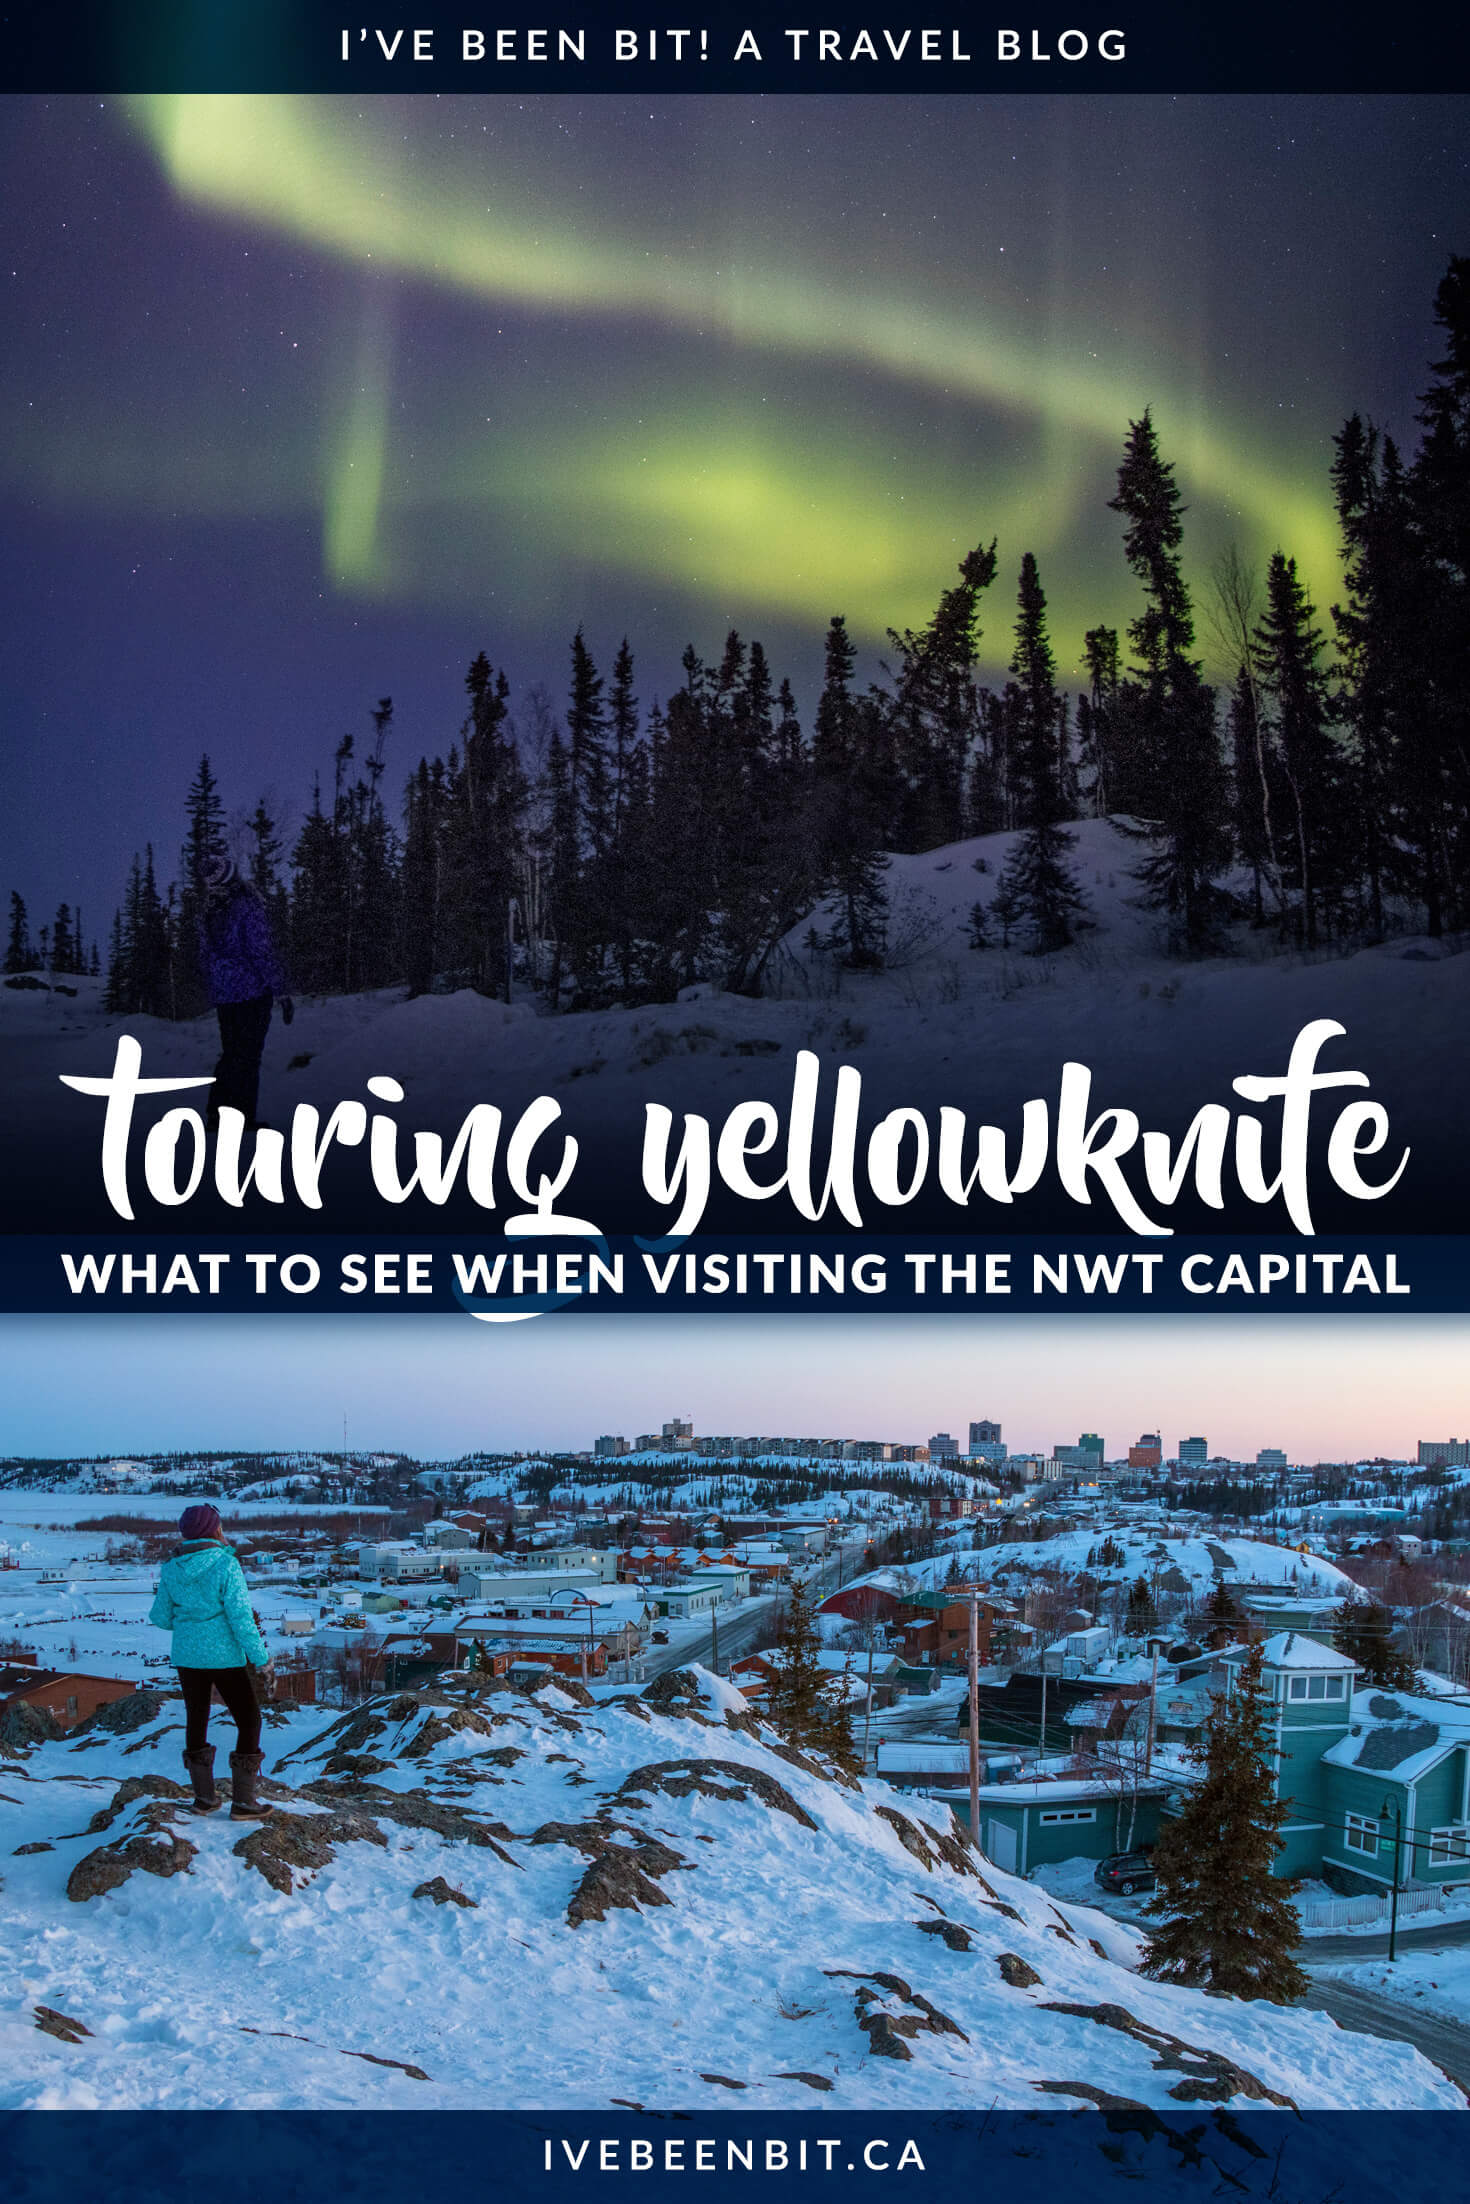 yellowknife tourism website